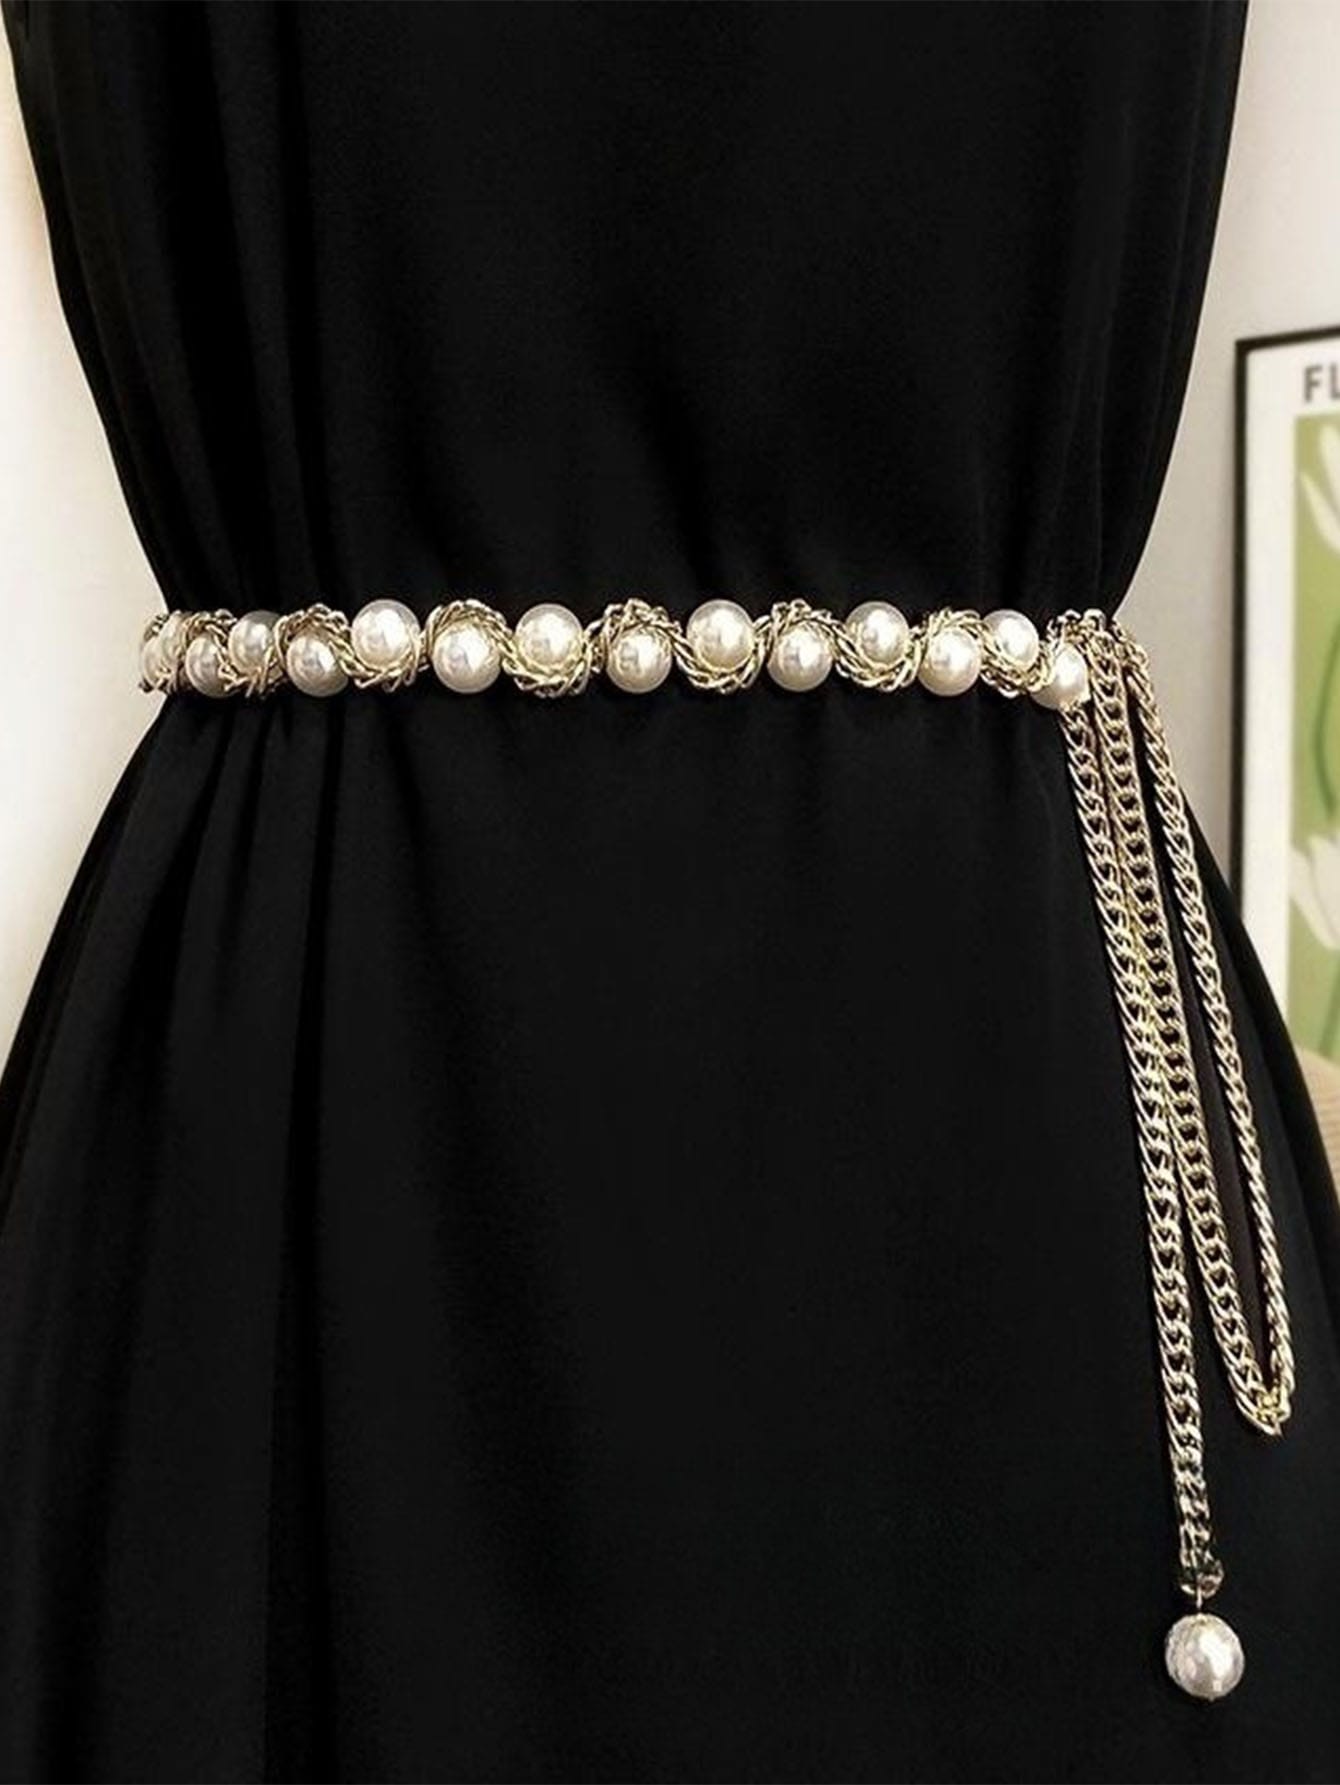 1pc Women's Golden Fashionable Pearl Decor Waist Chain, All-match Accessory To Match Dresses, Shirts, Etc. - Negative Apparel